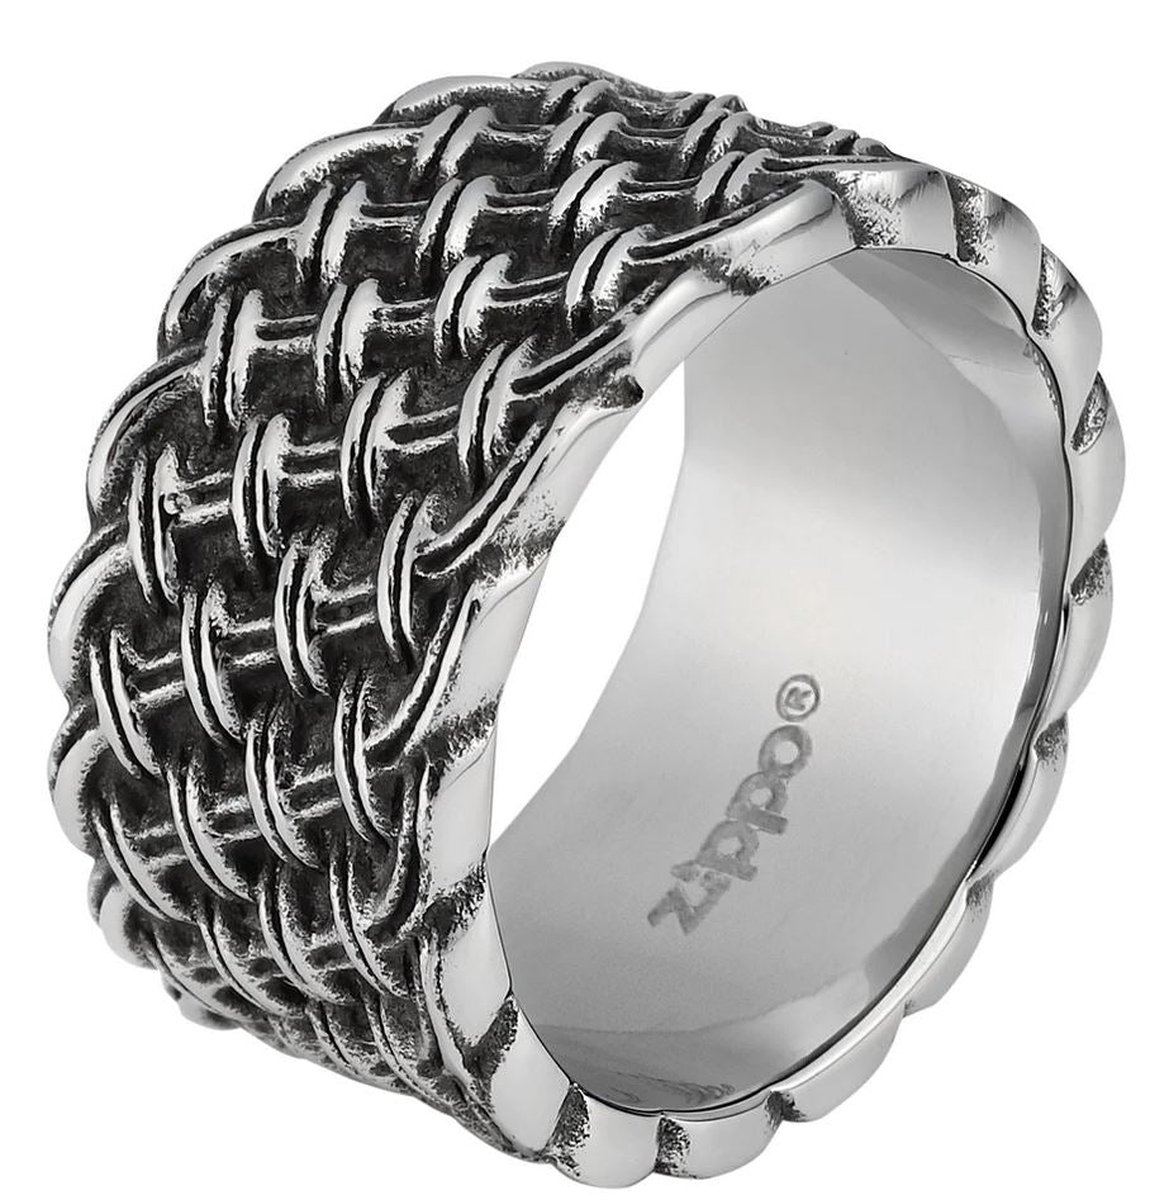 Zippo Steel Braided Ring